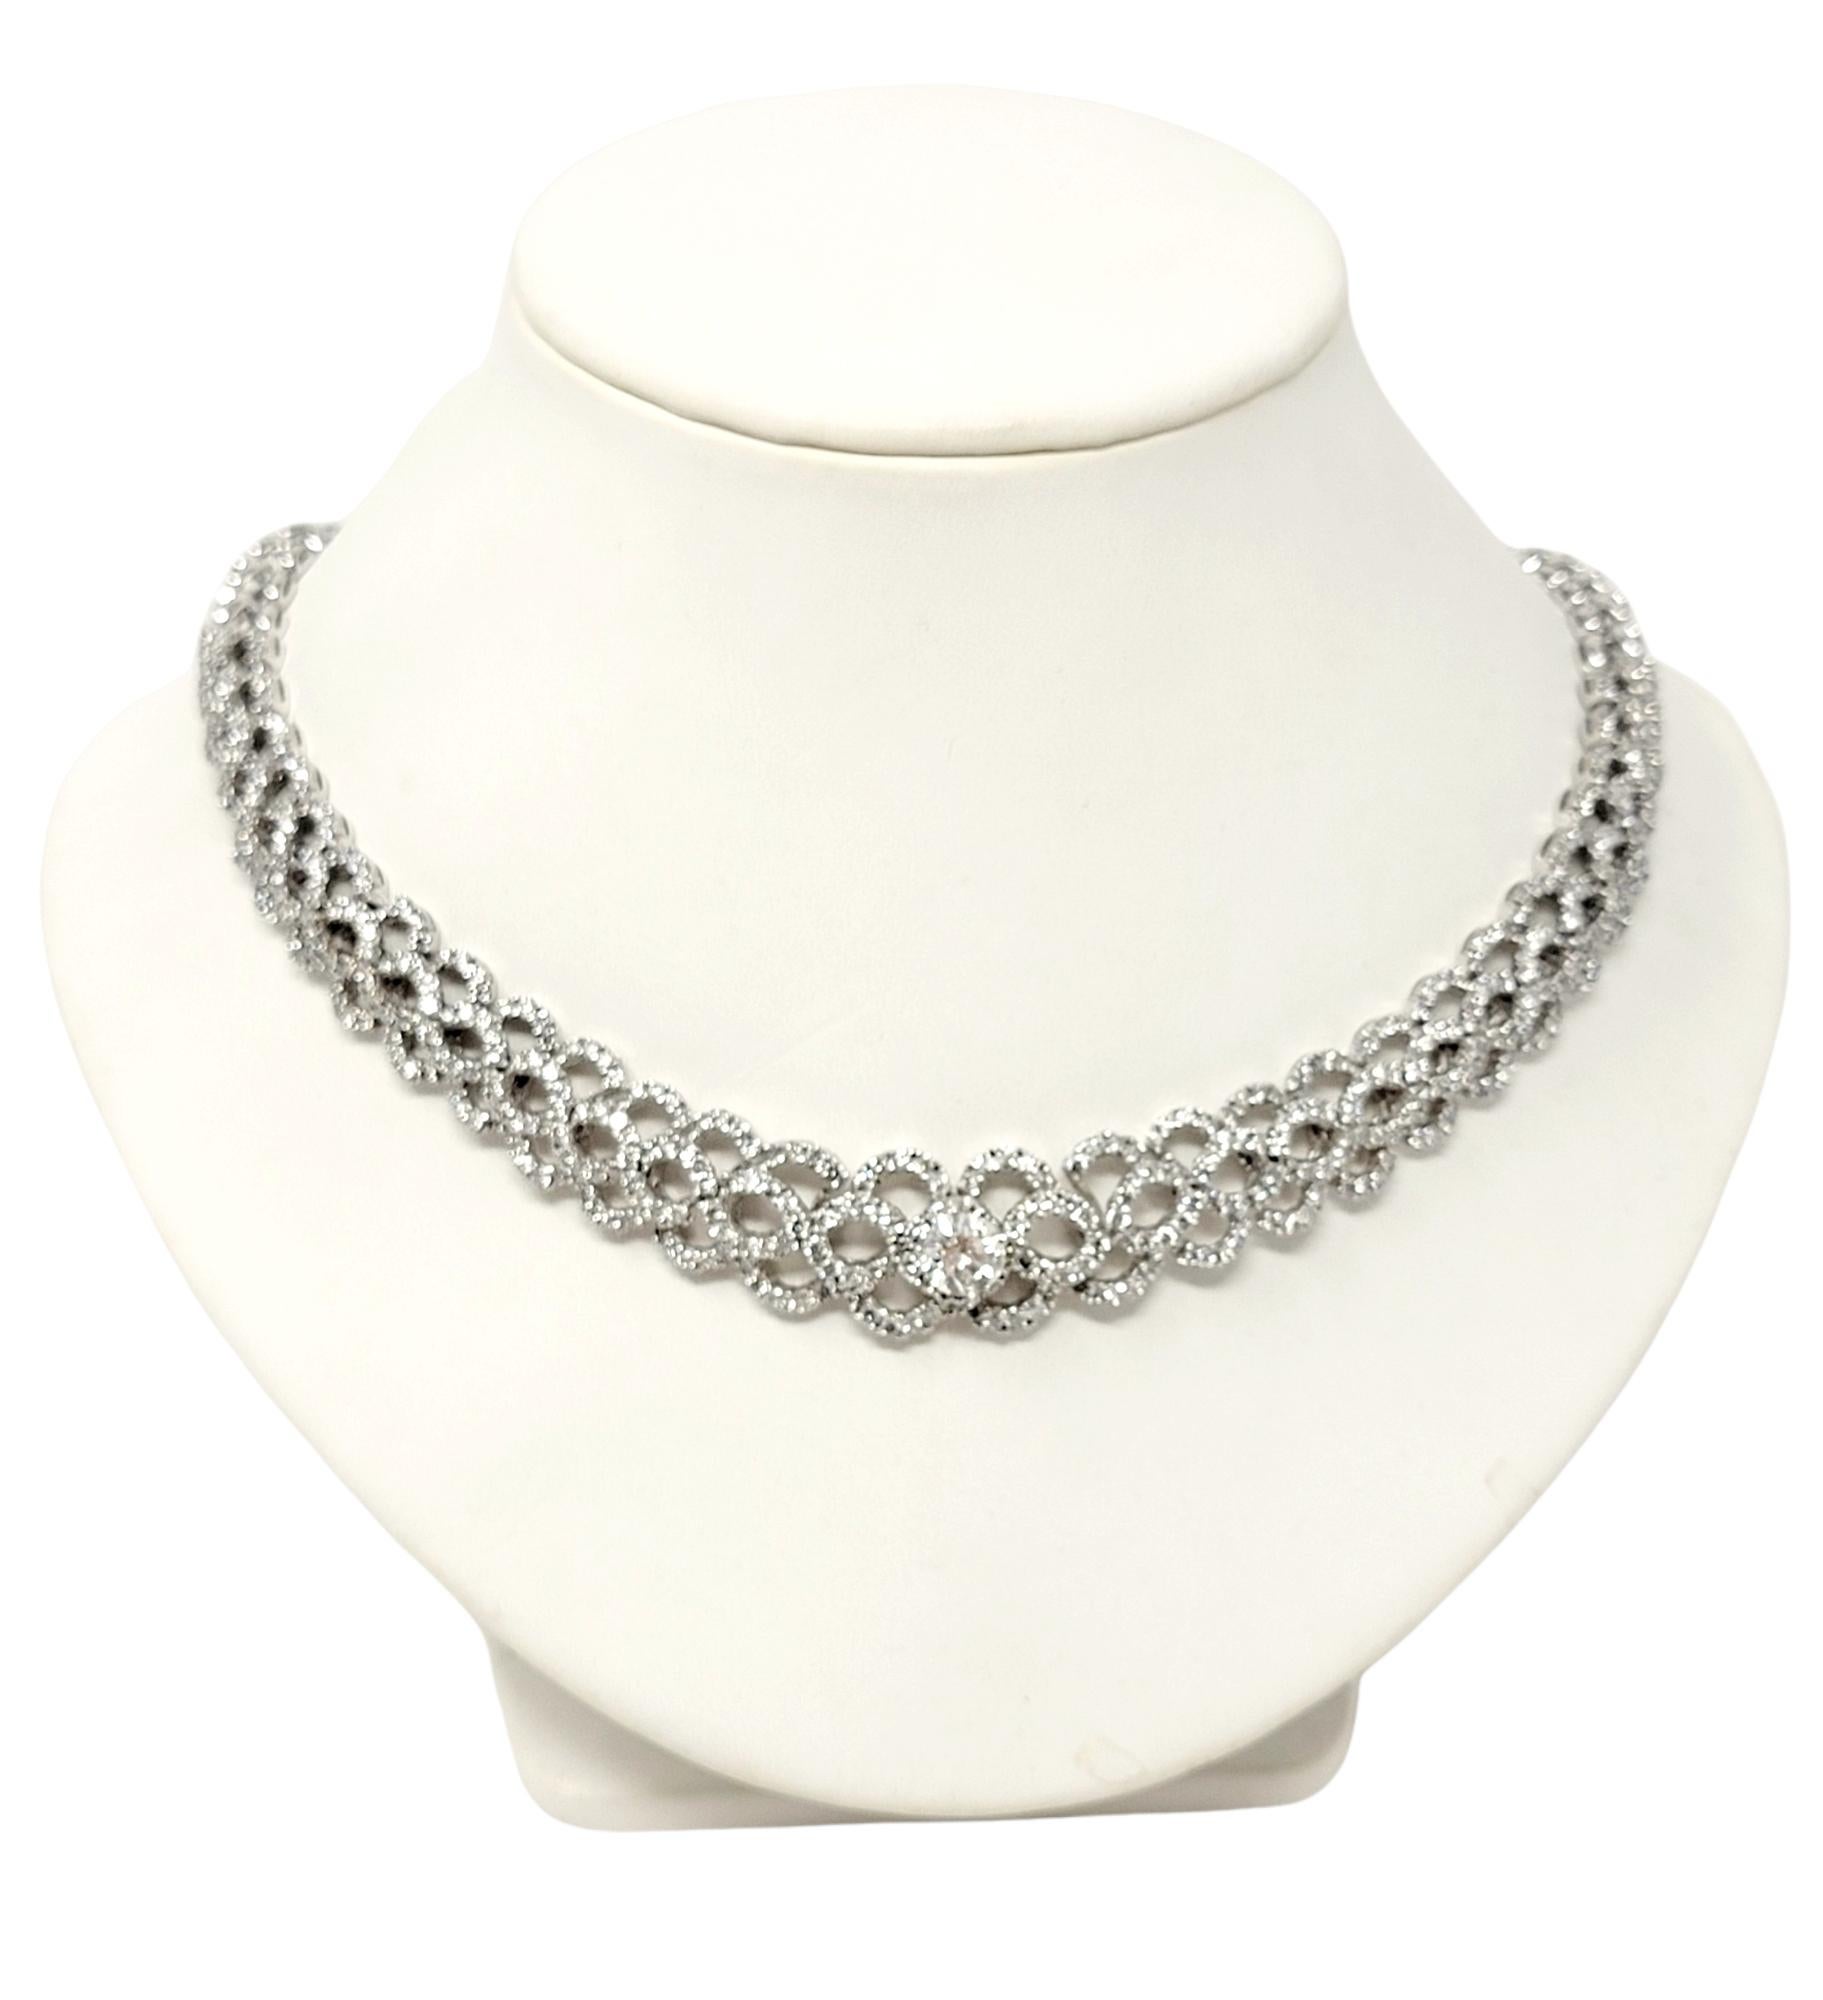 12.34 Carat Total Round Diamond Woven Braid Collar Necklace 14 Karat White Gold In Good Condition For Sale In Scottsdale, AZ